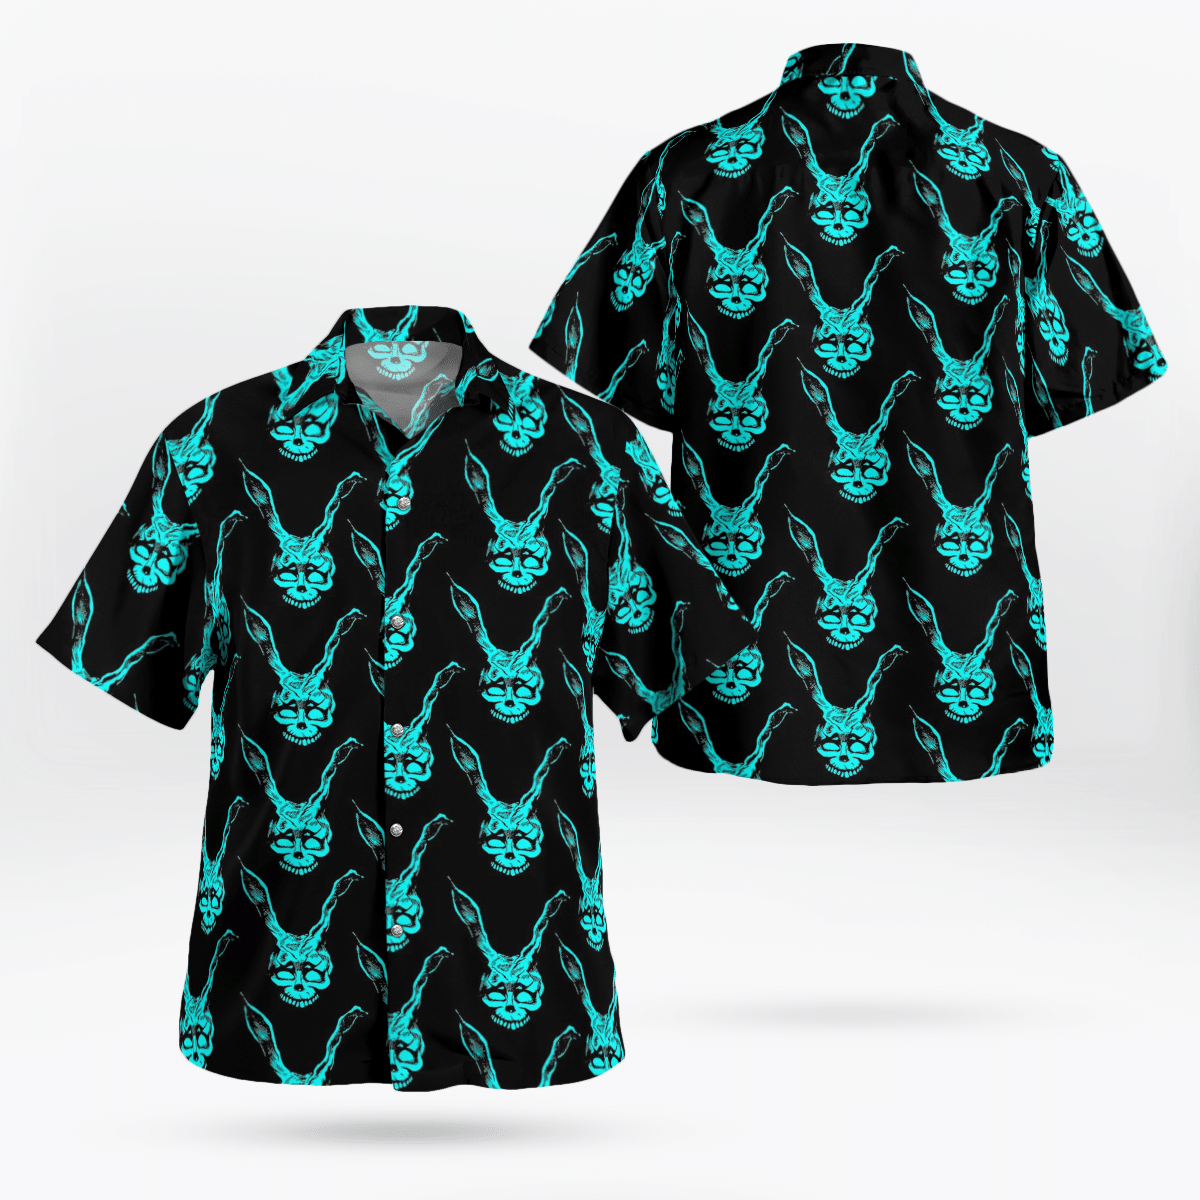 Donnie Darko horror movie Hawaiian shirt